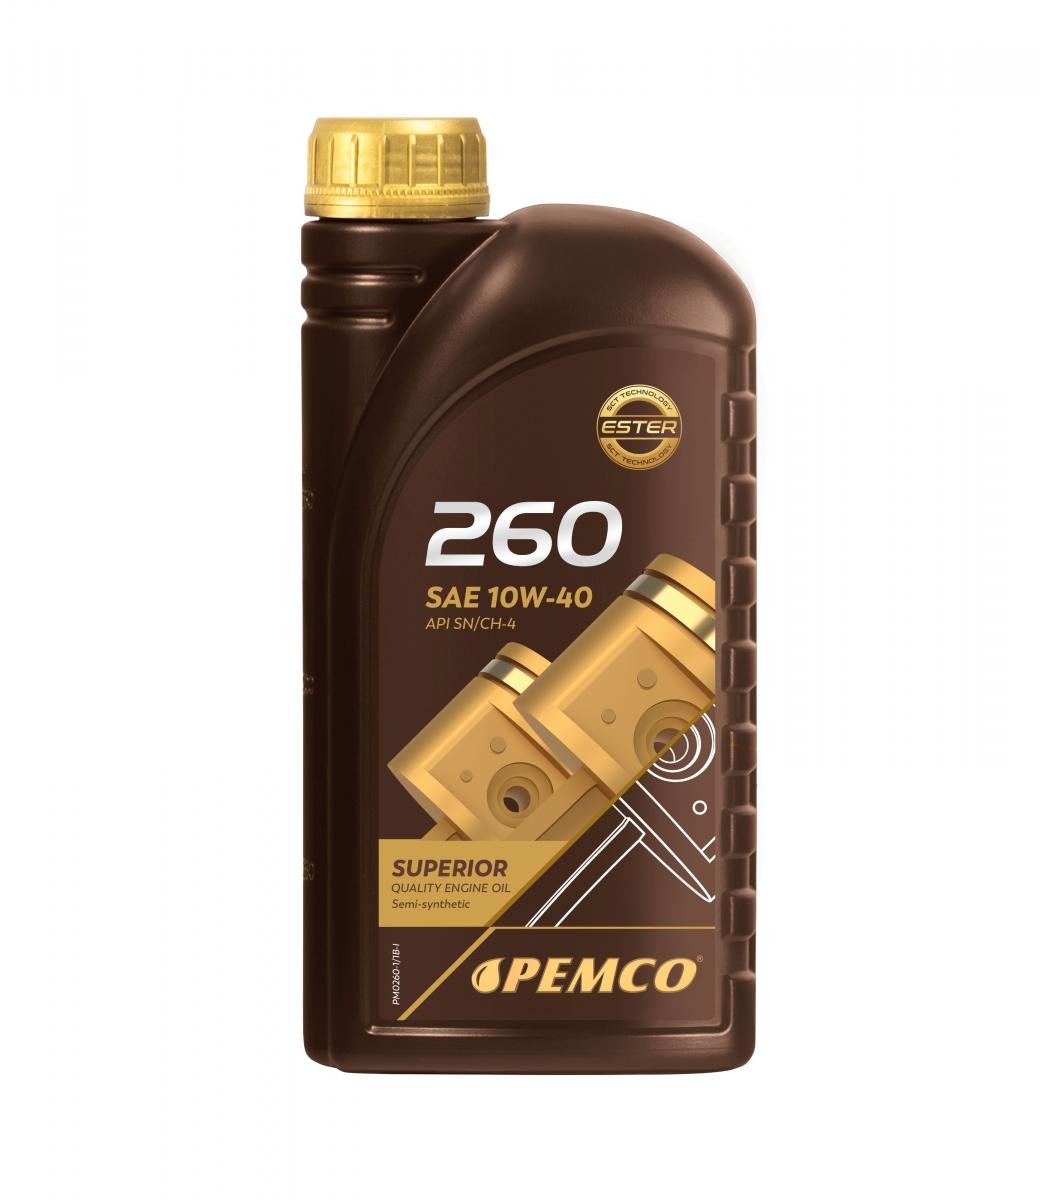 PEMCO iDRIVE 200, iDRIVE 260 PM0260-1 Motorolie 10W-40, 1L, Deels synthetische olie